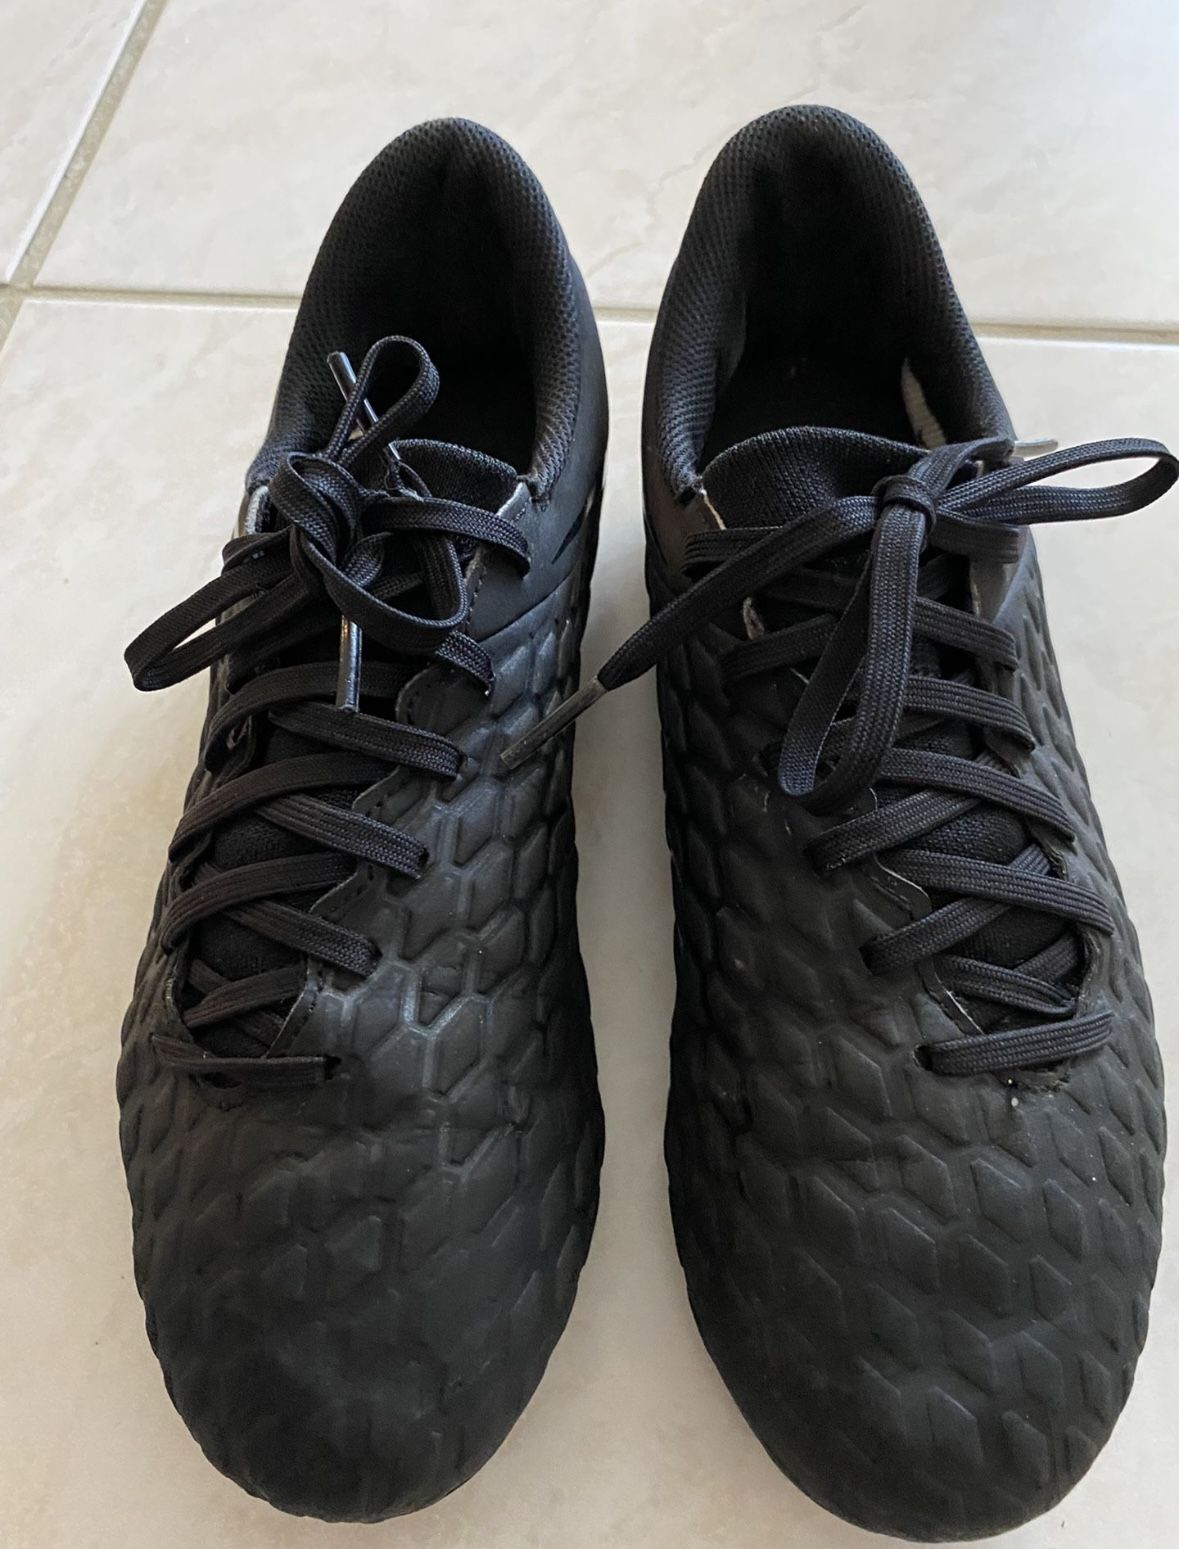 Boy’s Soccer Shoes